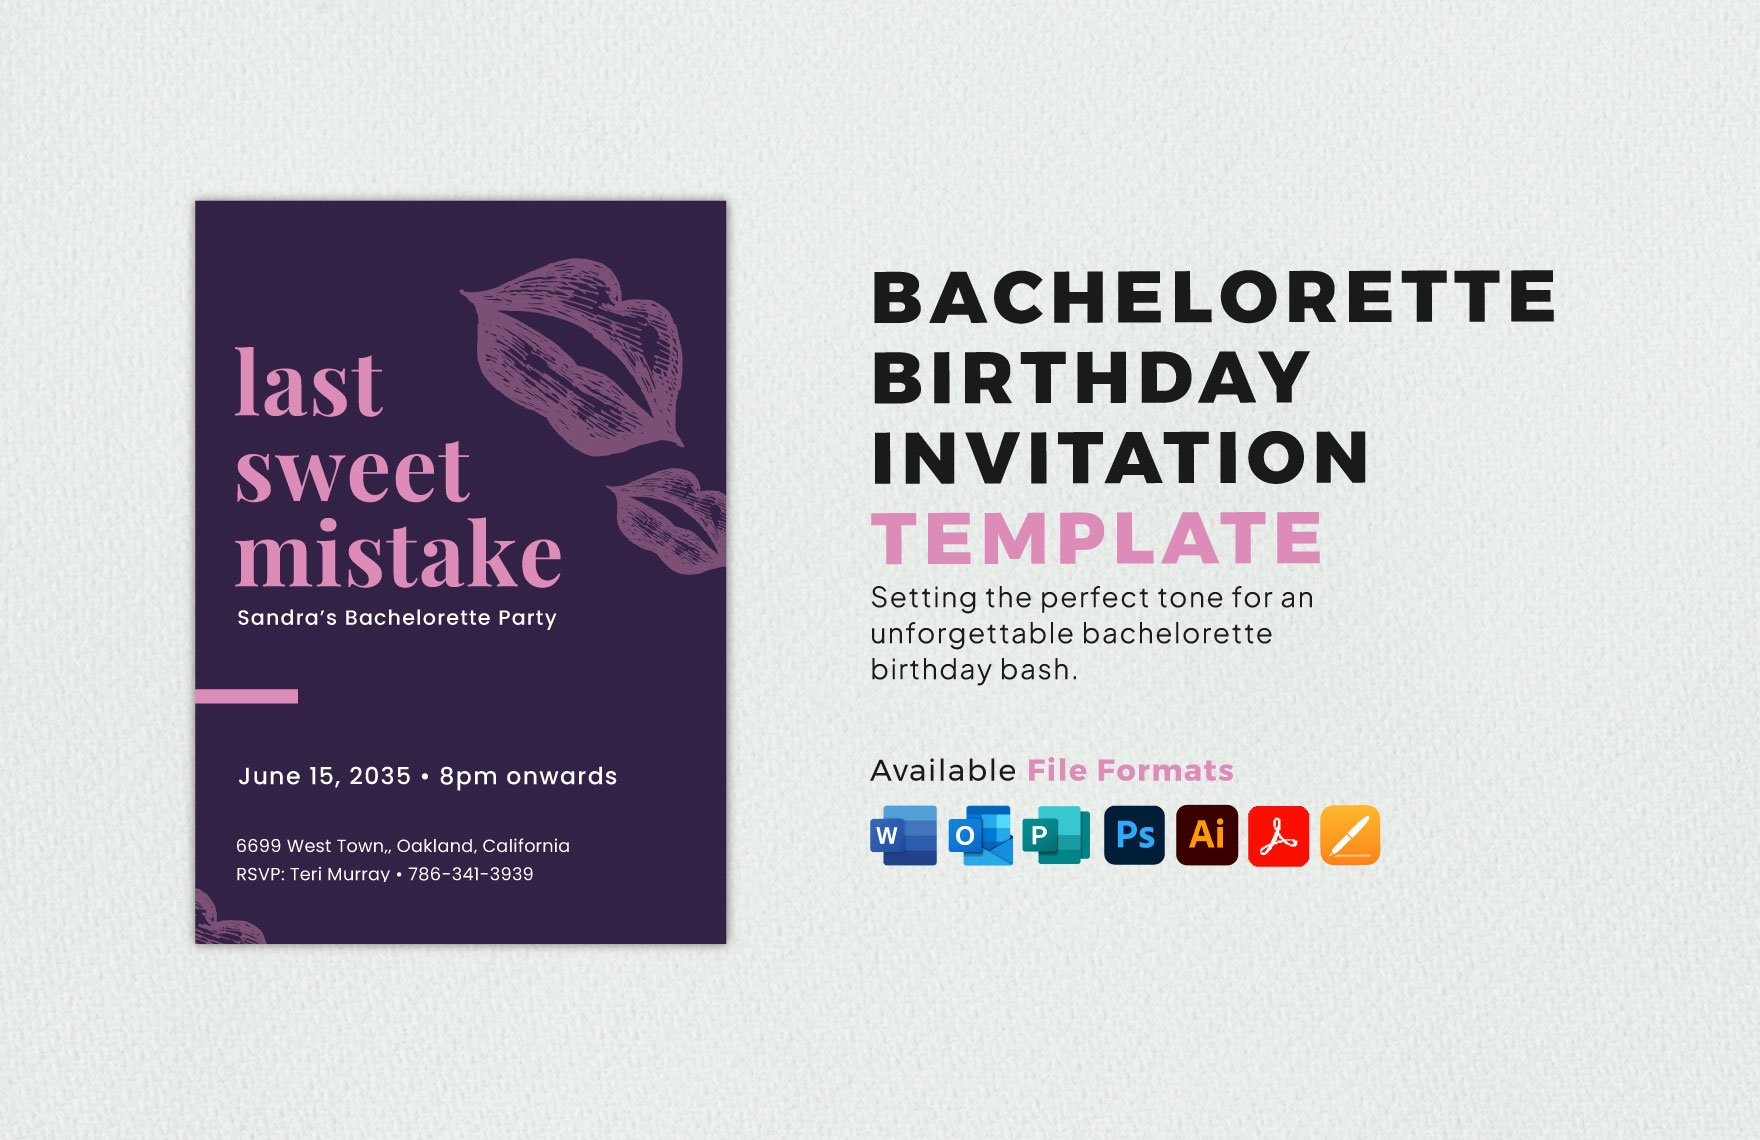 Bachelorette Birthday Invitation Template